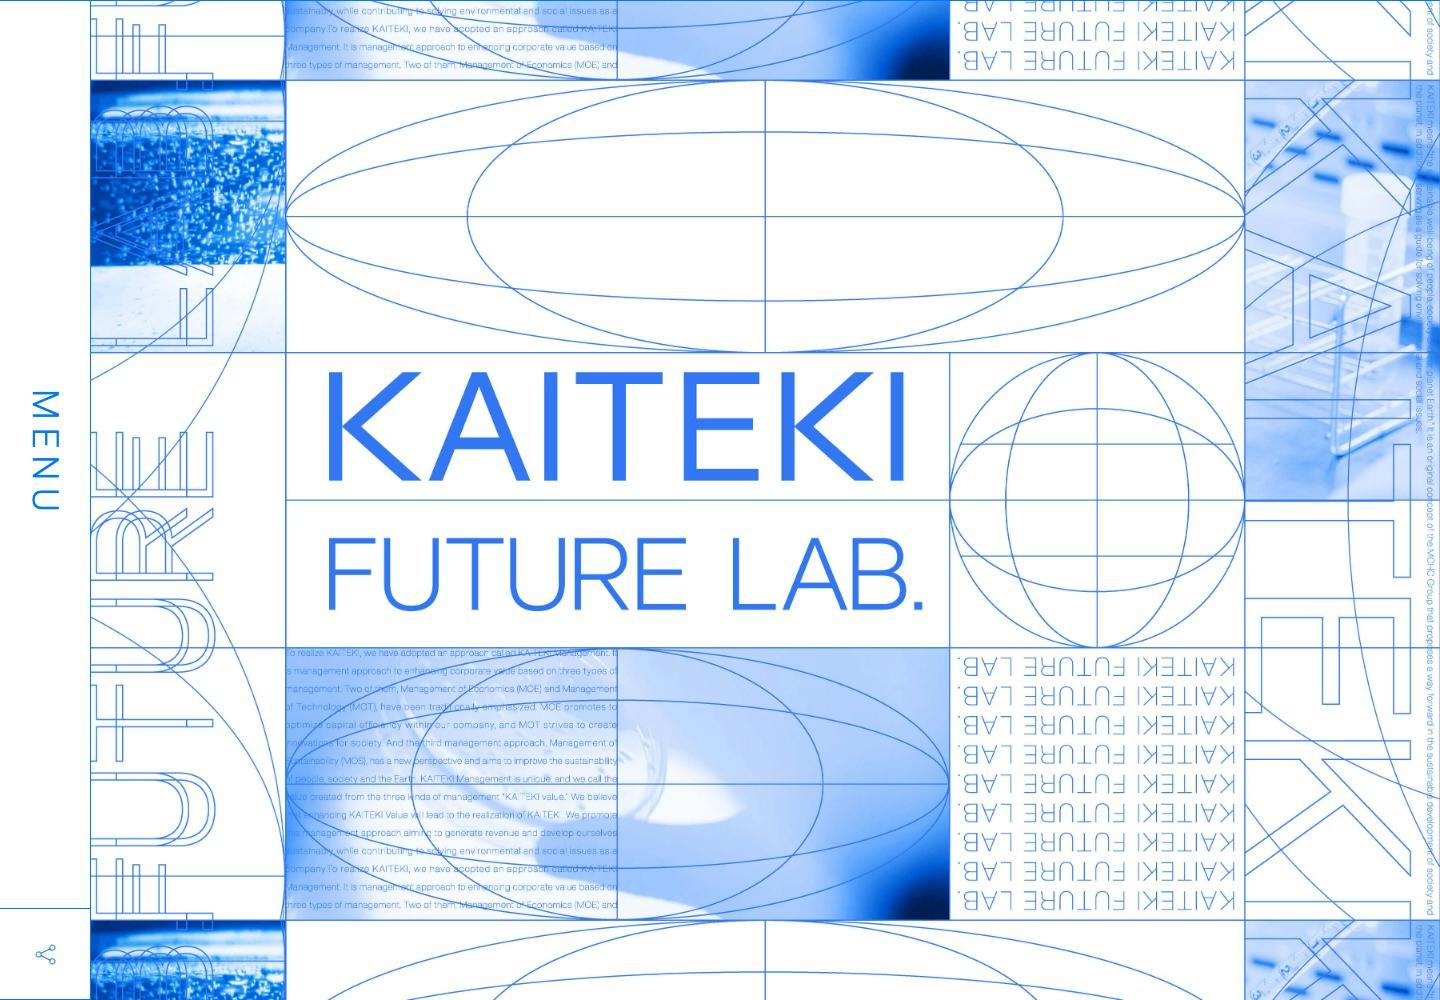 Cover Image for ”KAITEKI” FUTURE LAB.